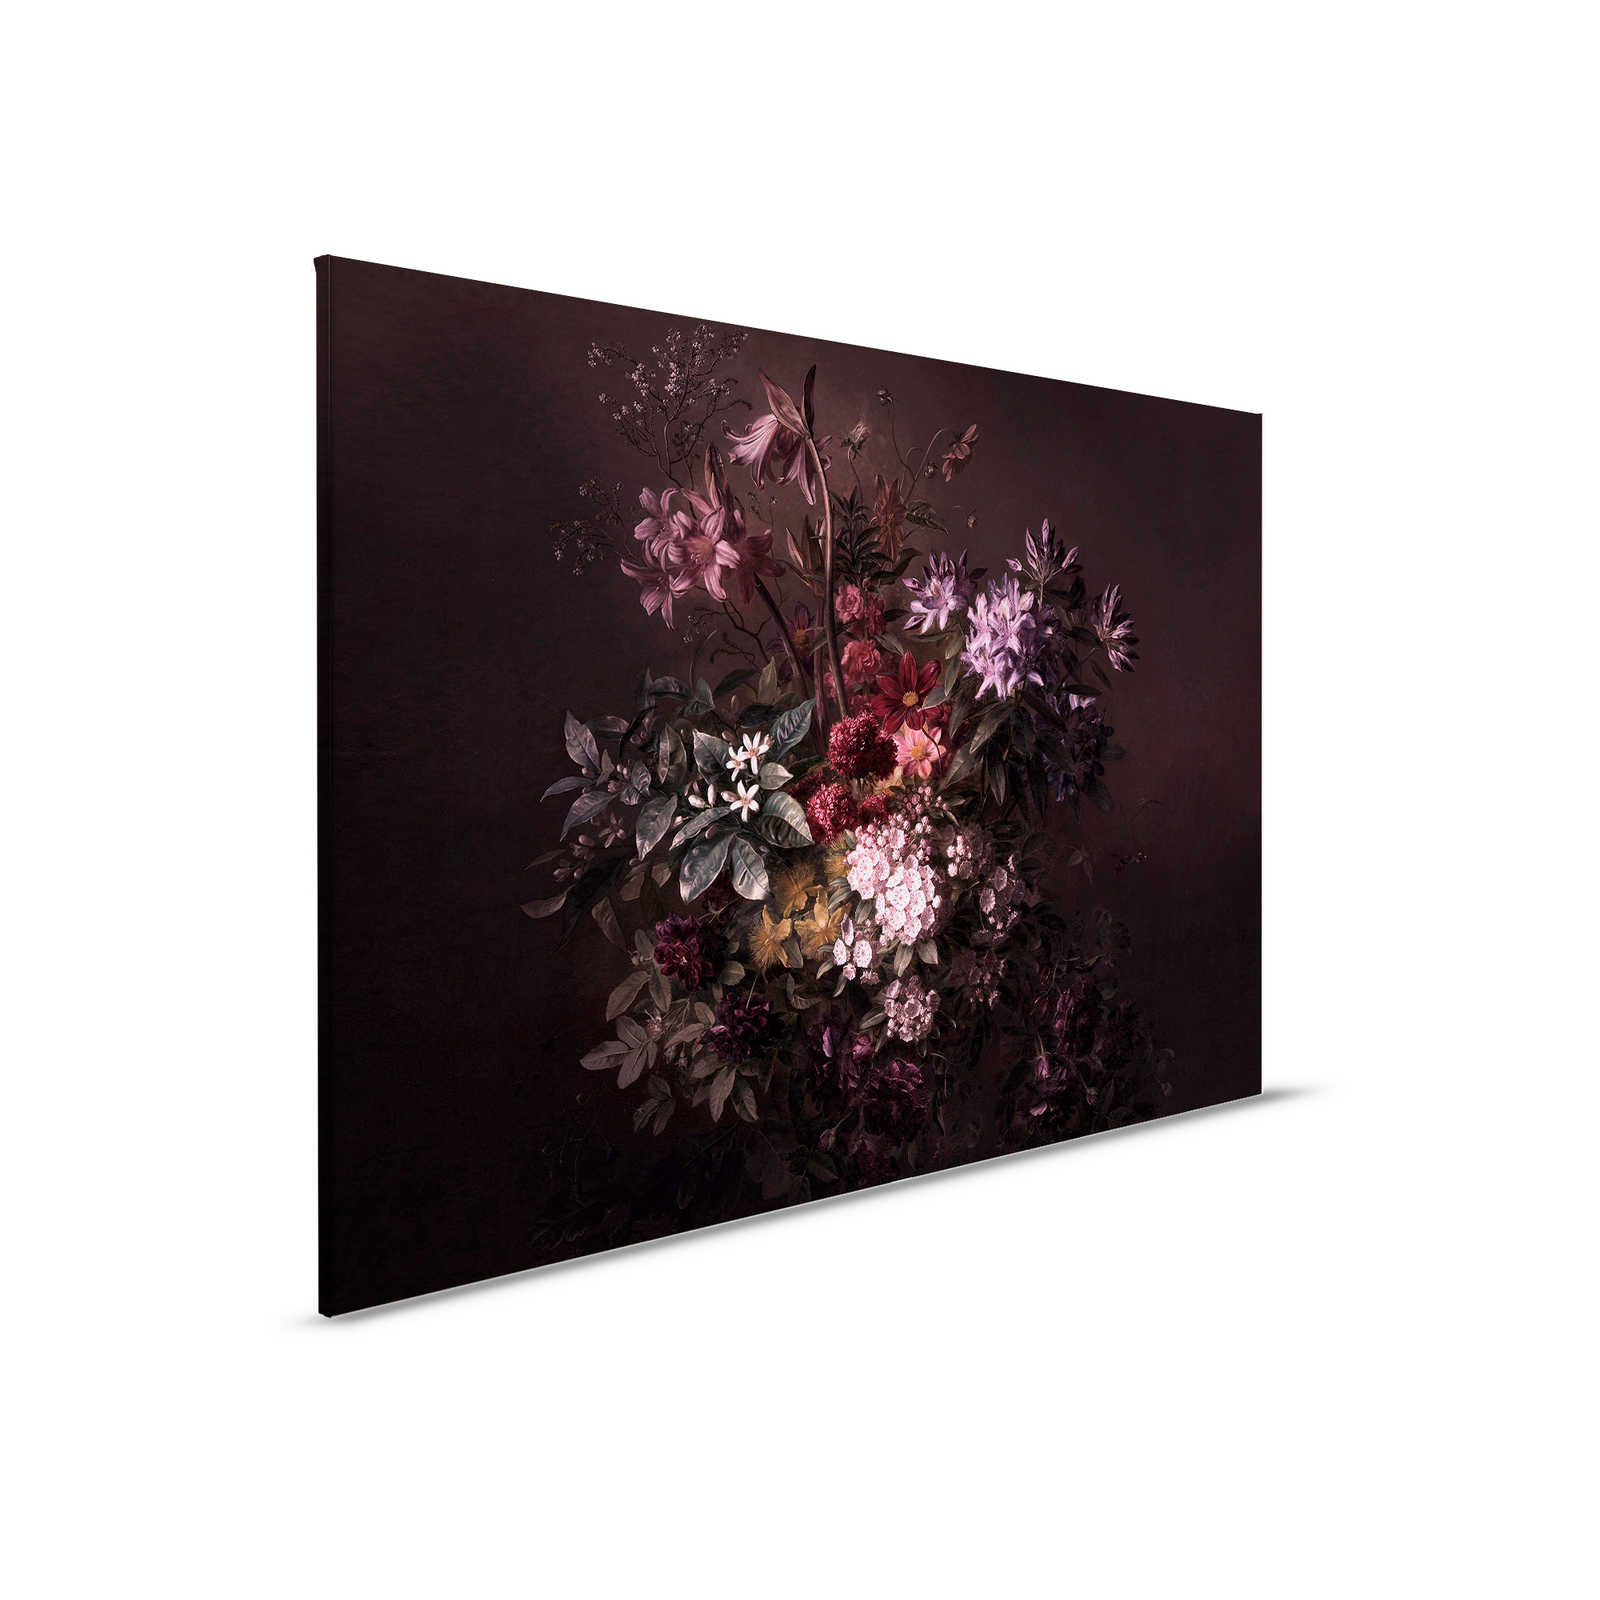         Canvas painting Flowers Still Life - 0,90 m x 0,60 m
    